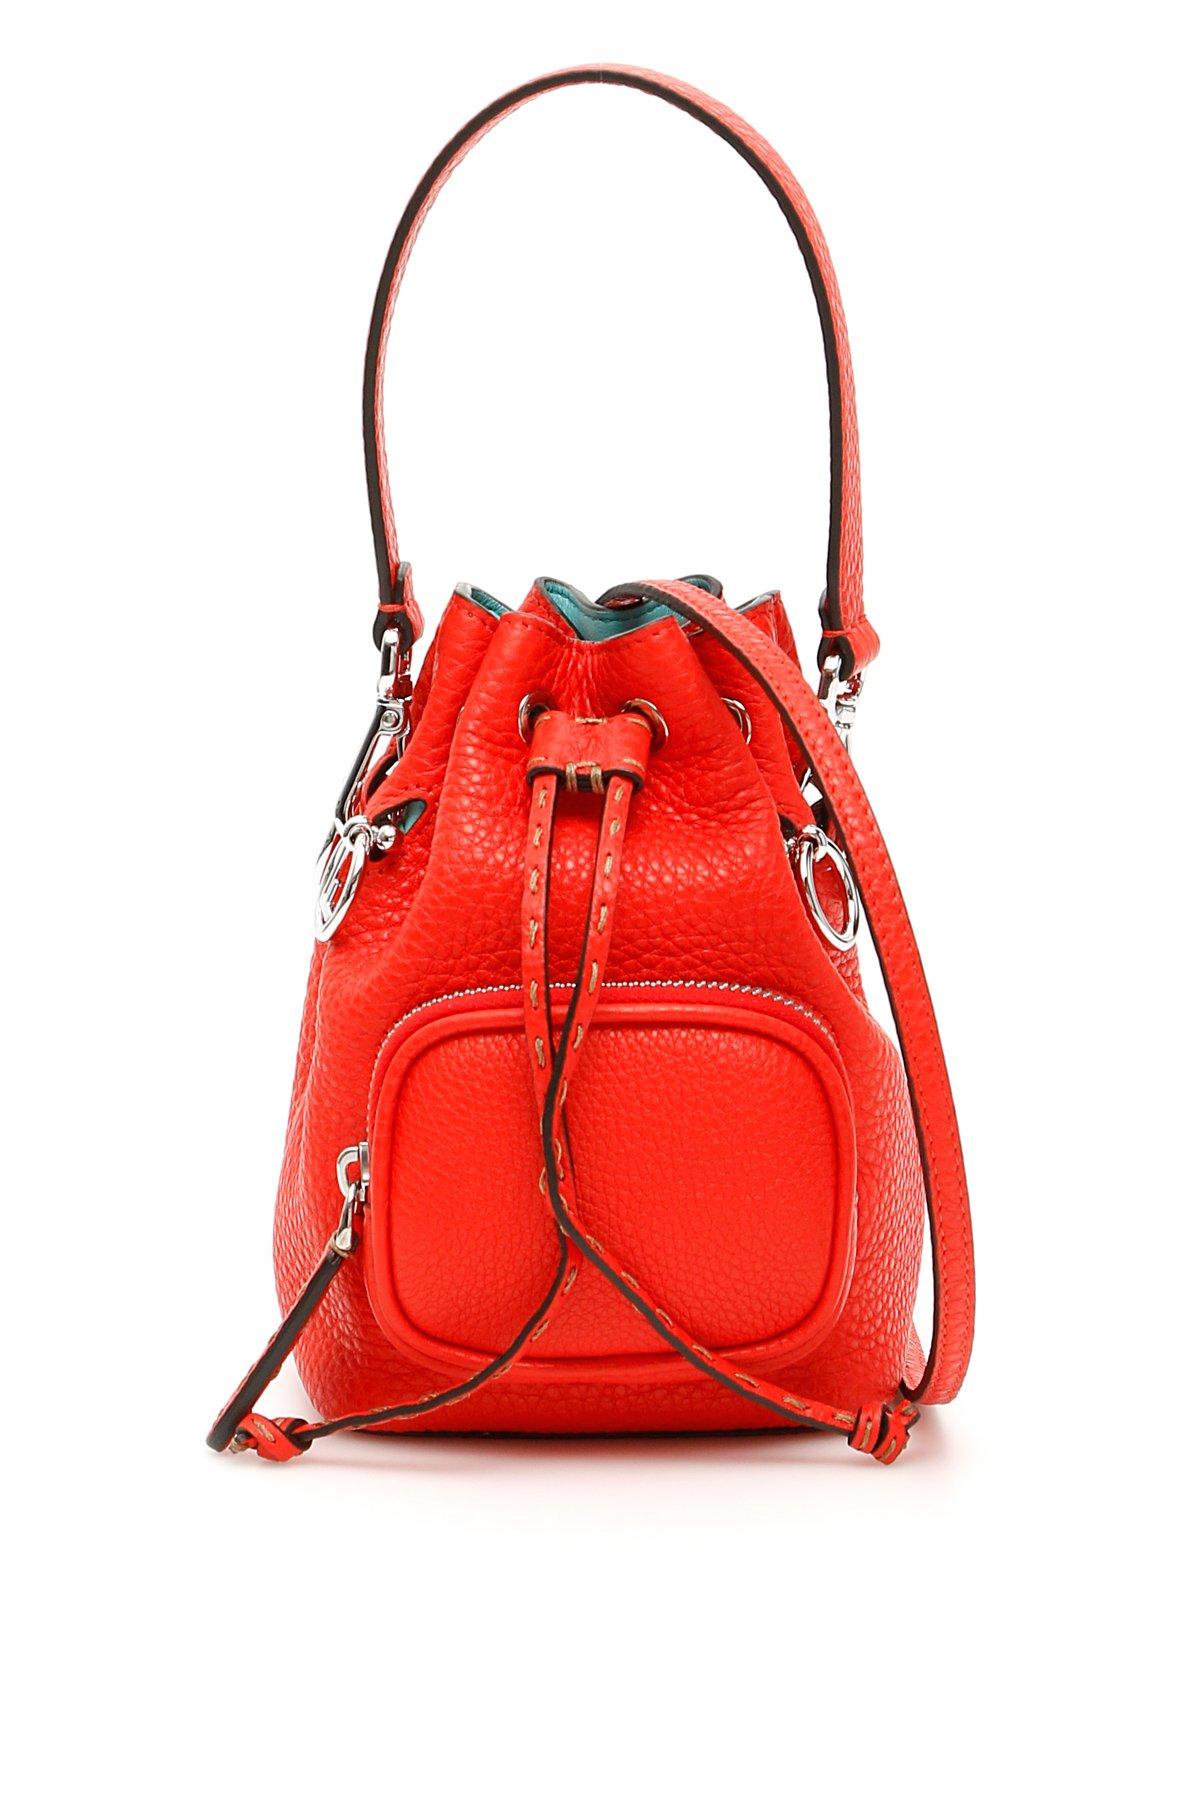 Fendi Leather Roma Amor Mini Bucket Bag in Red - Lyst